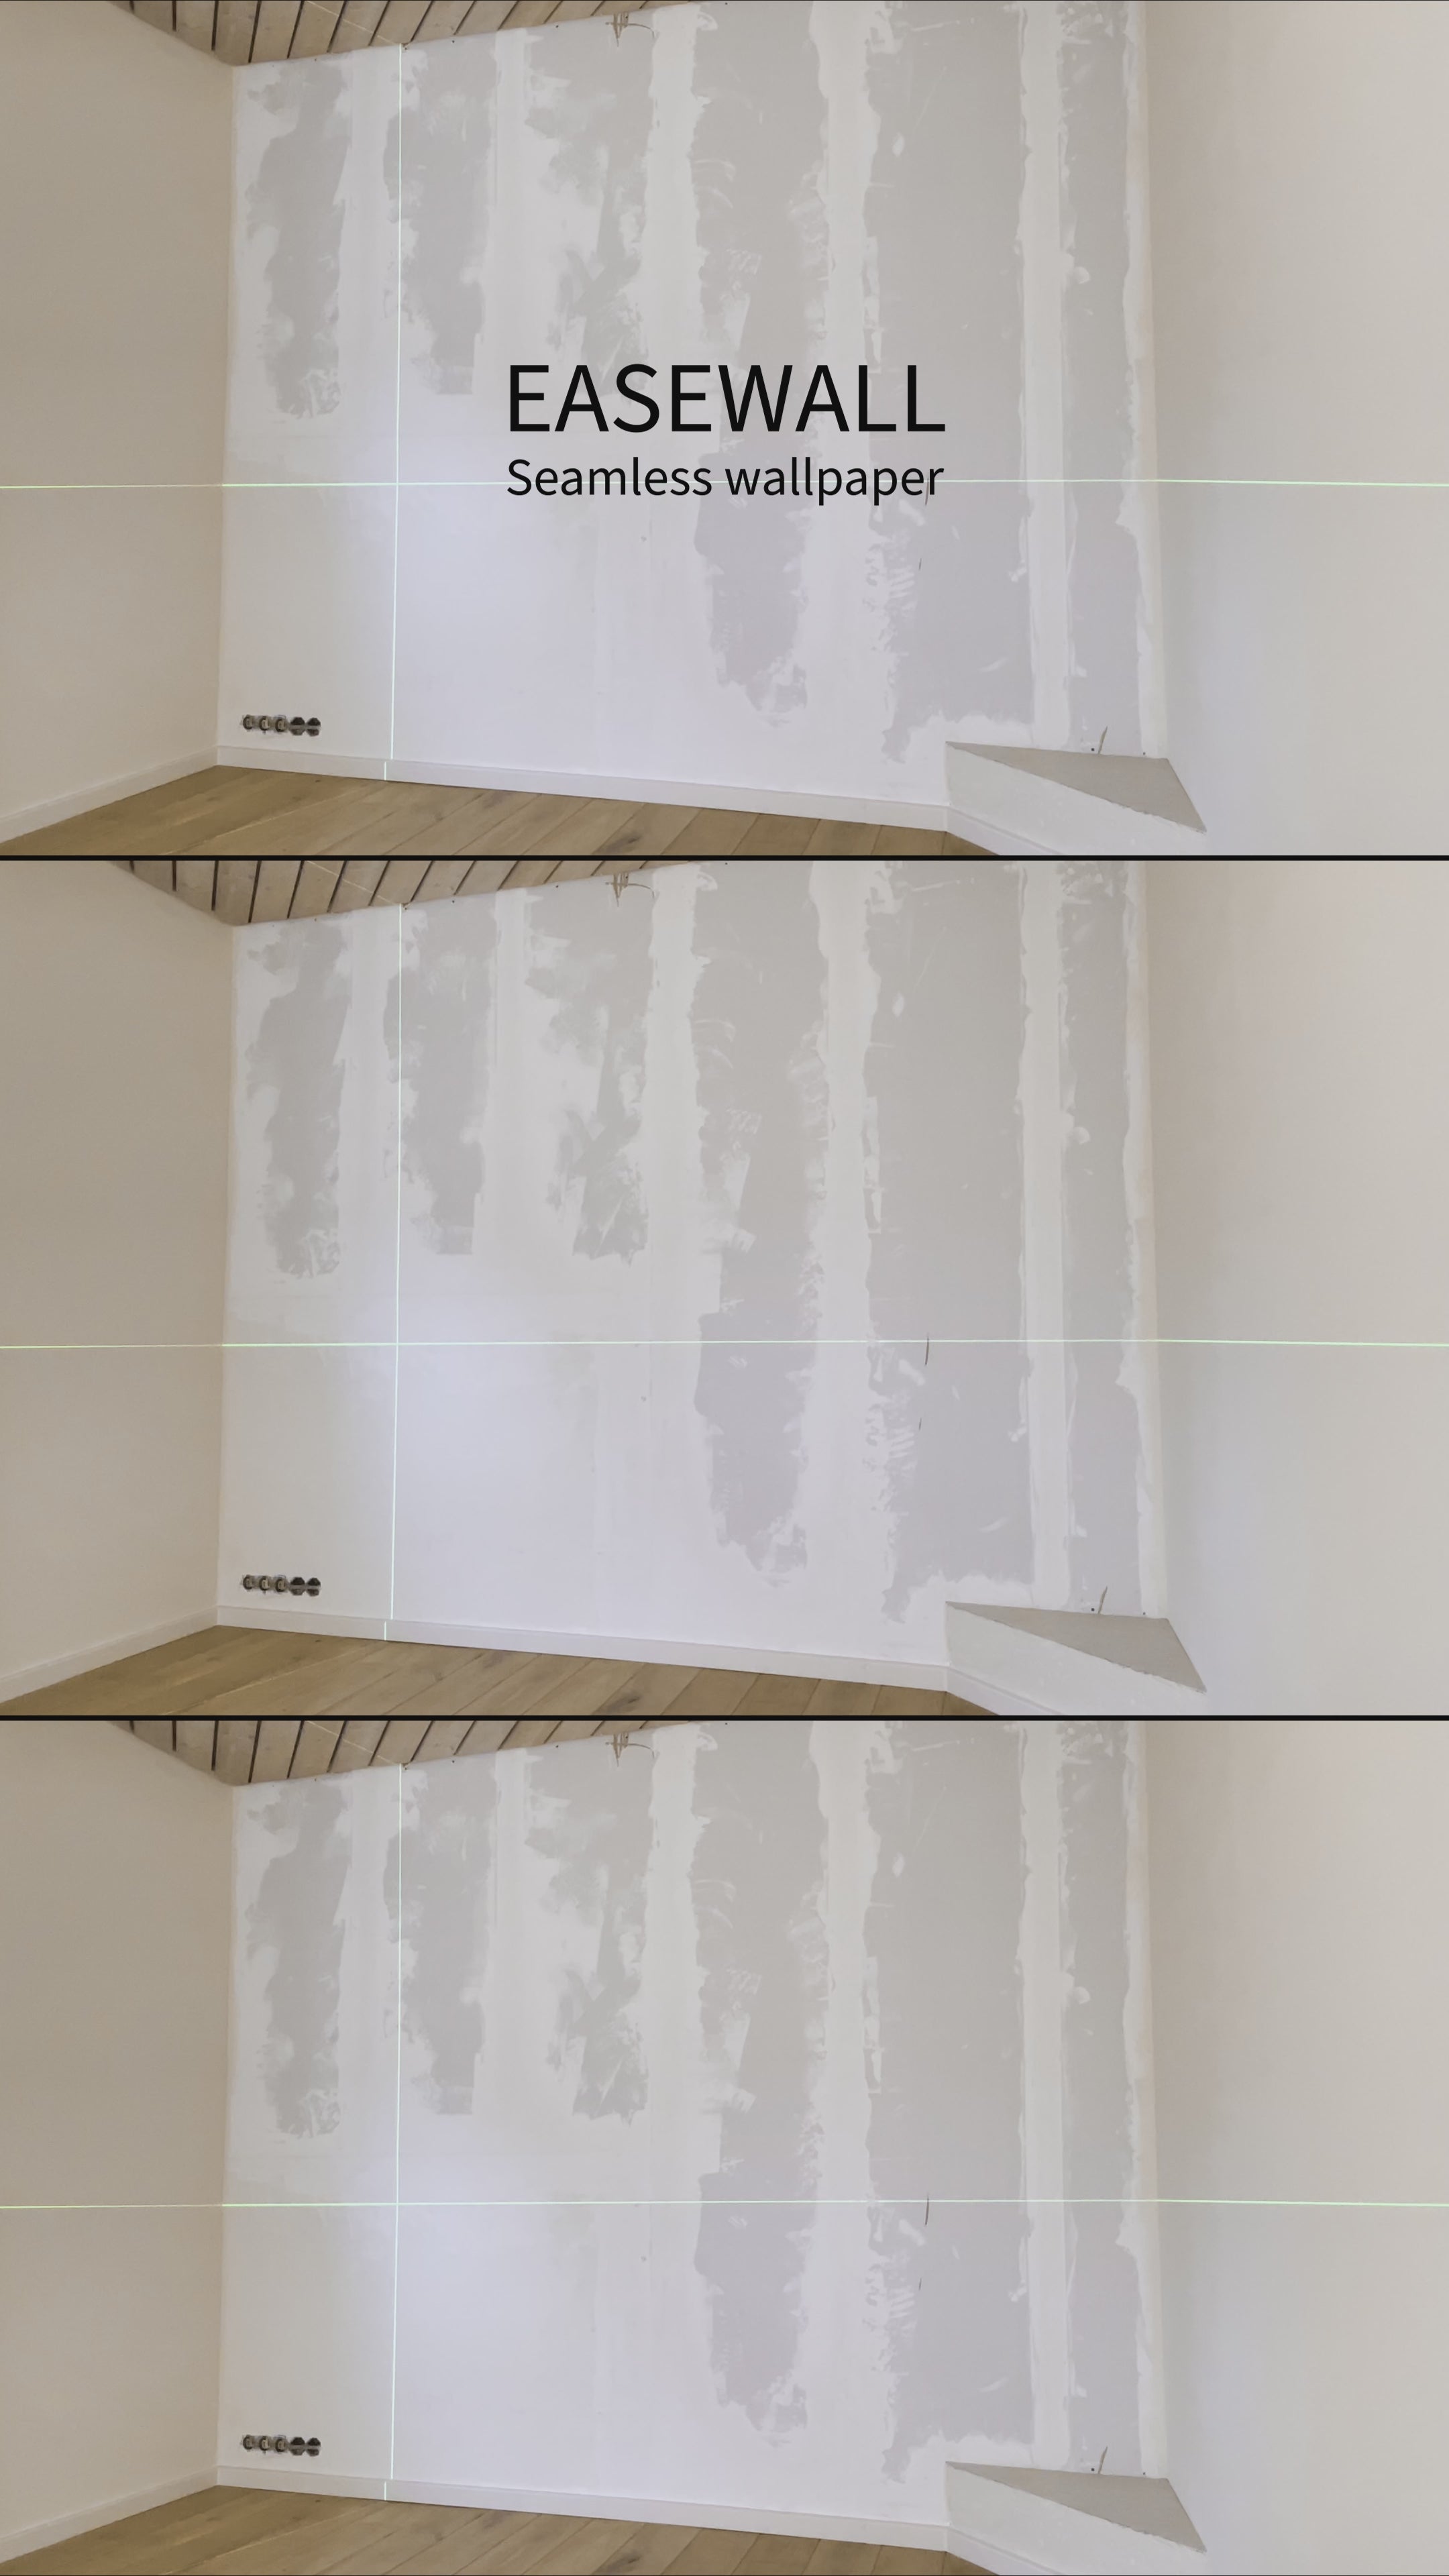 Load video: Seamless wallpaper installation video